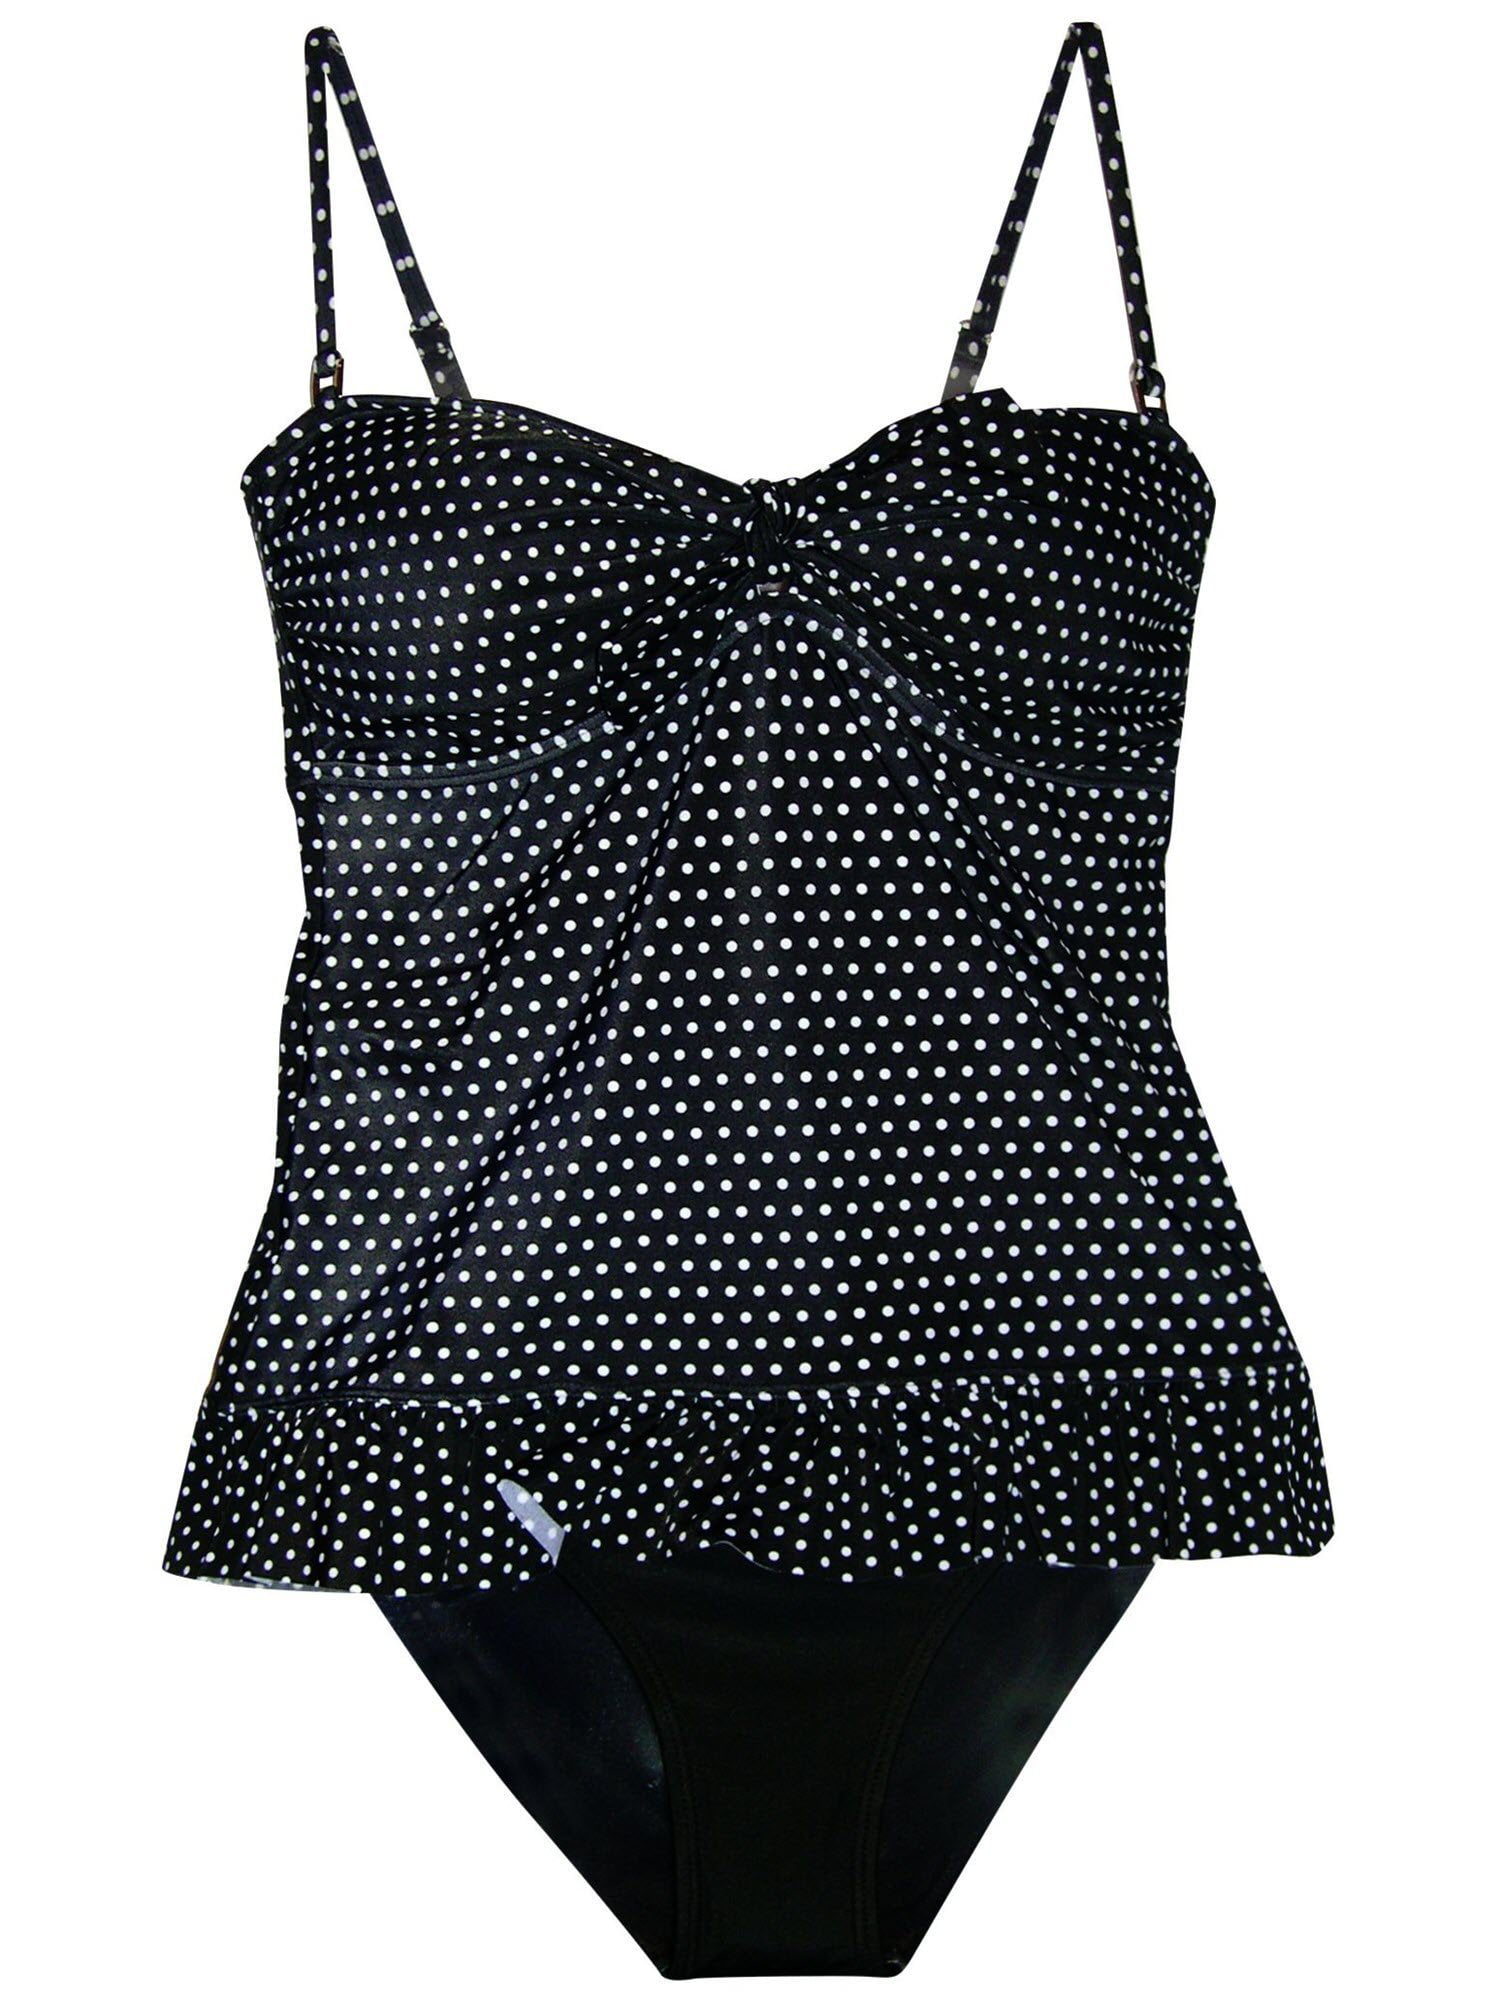 Marina West Women's Retro Ruffle Tankini Bikini Swimsuit Set - Walmart.com